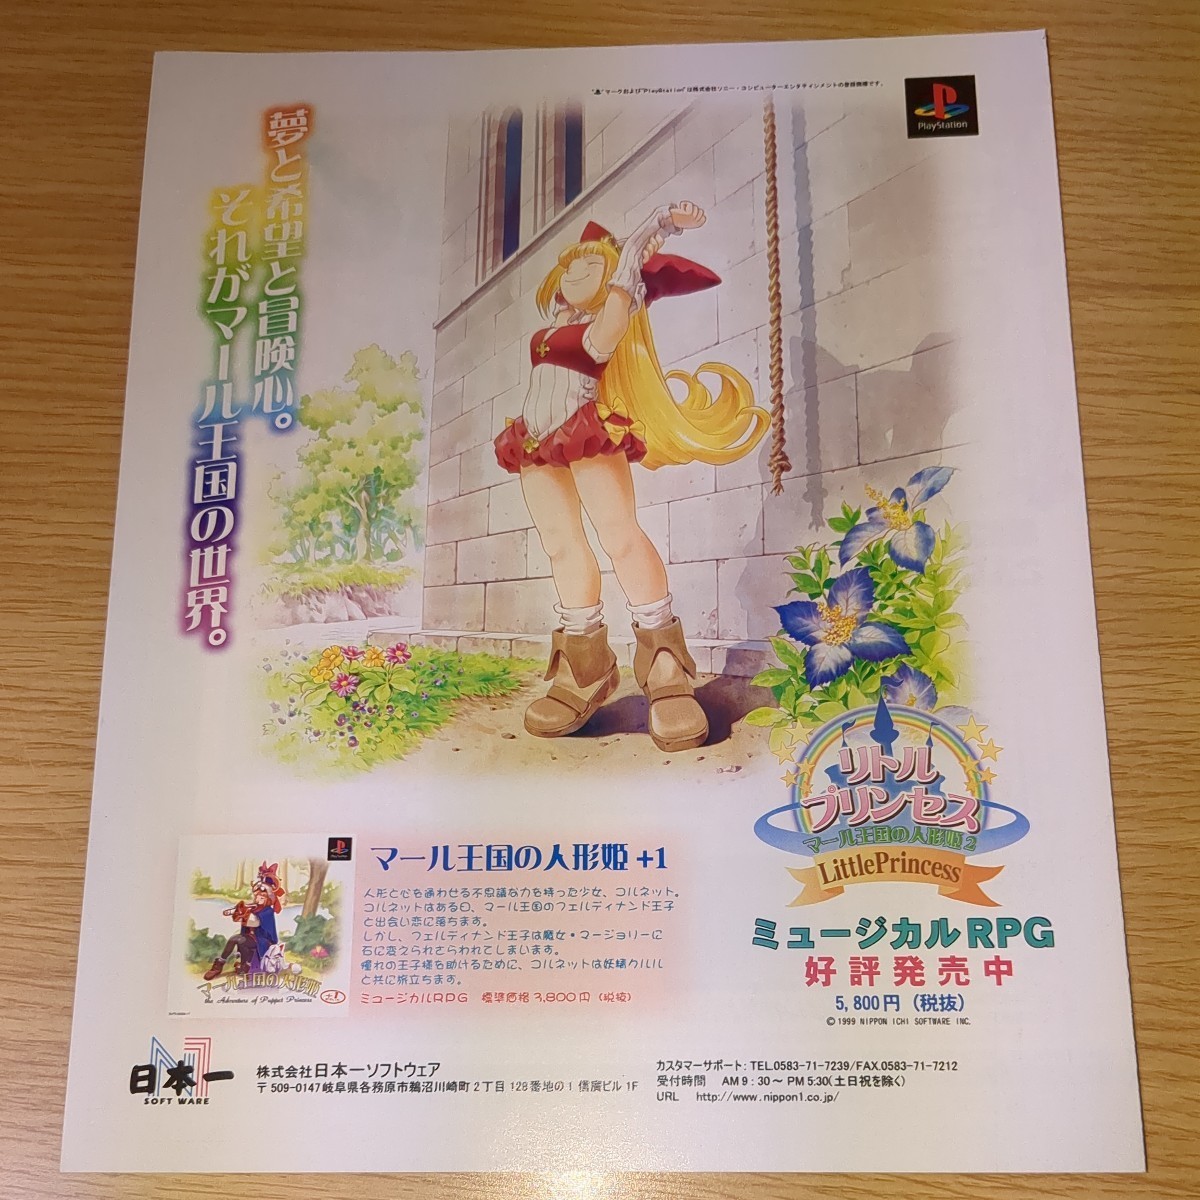 PS プレイステーション ソフト パンフレット リトル プリンセス マール王国の人形姫 2 日本一ソフトウェア 1999年 当時物 非売品_画像1